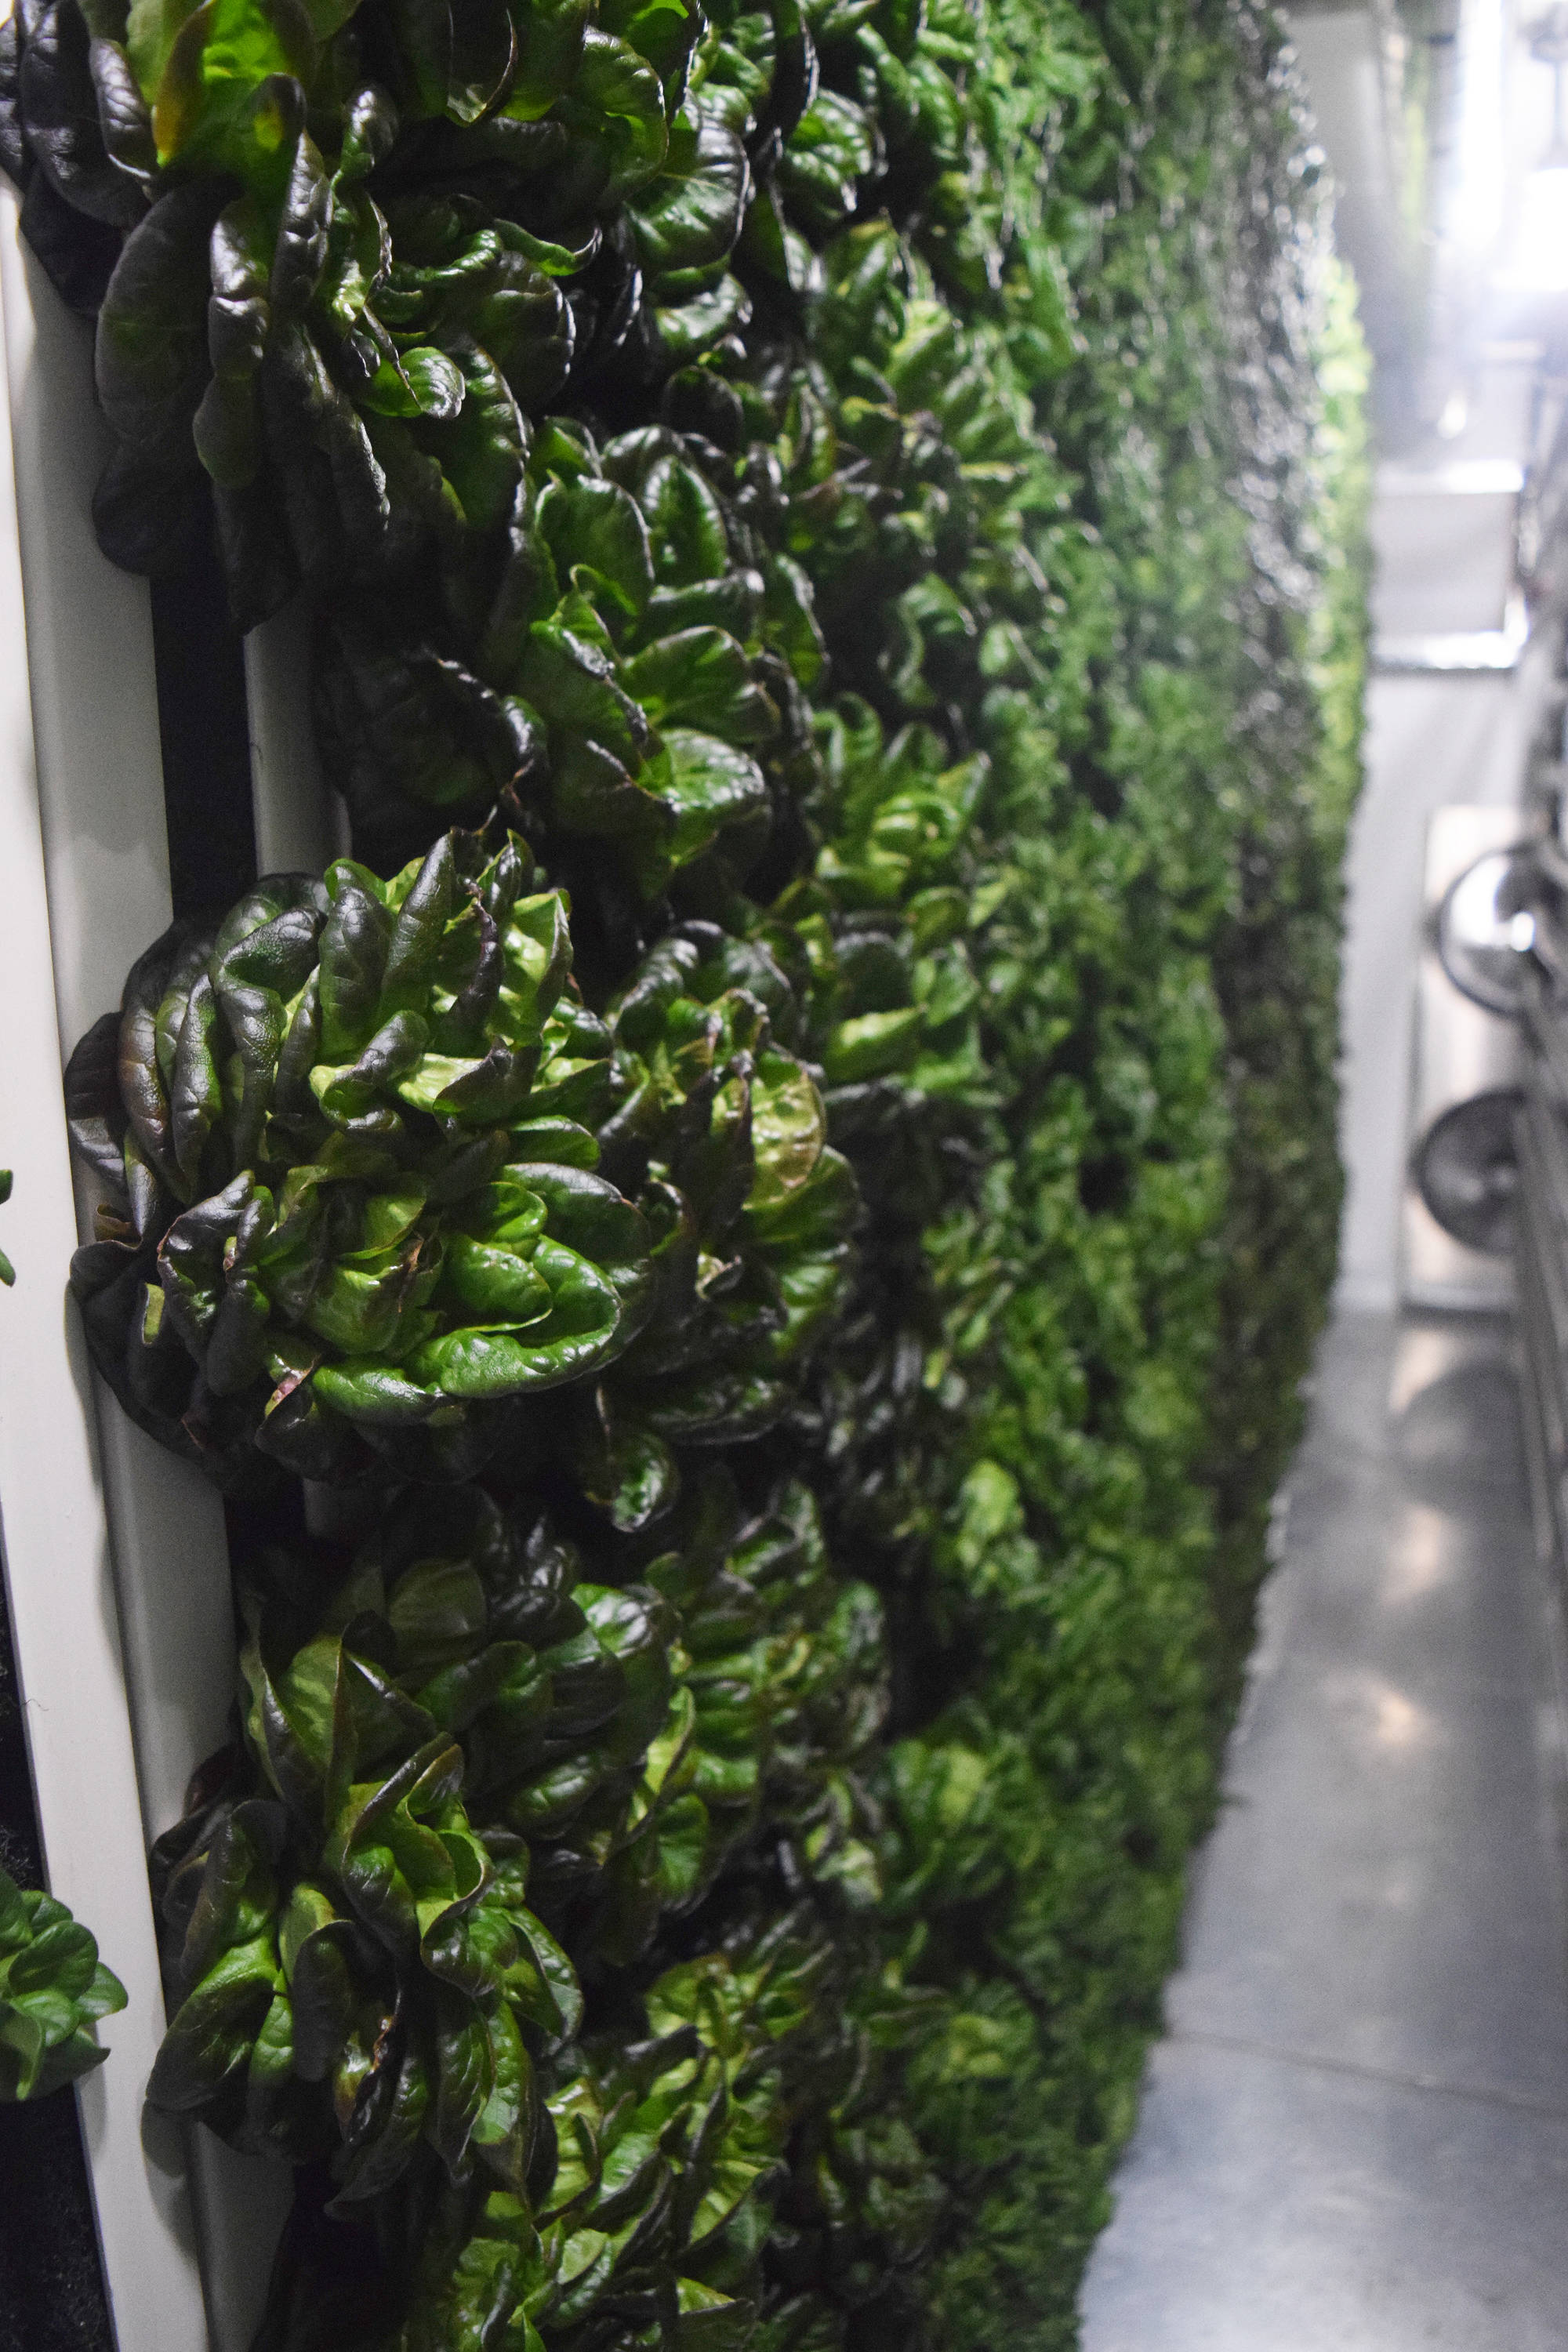 Salanova lettuce grows in vertical rows at Fresh365 in Soldotna. (Photo by Joey Klecka/Peninsula Clarion)